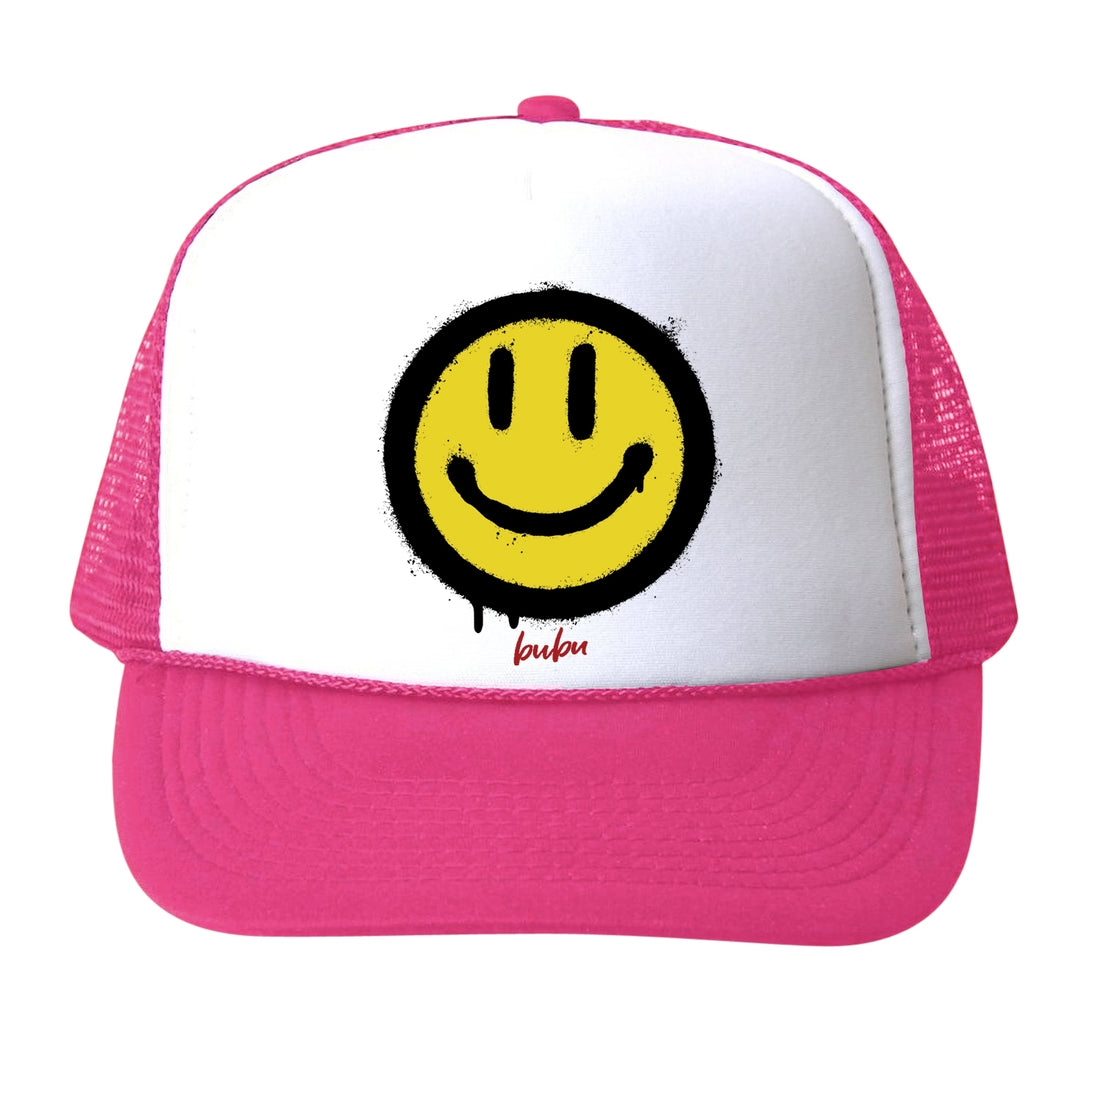 Bubu all smiles trucker hat